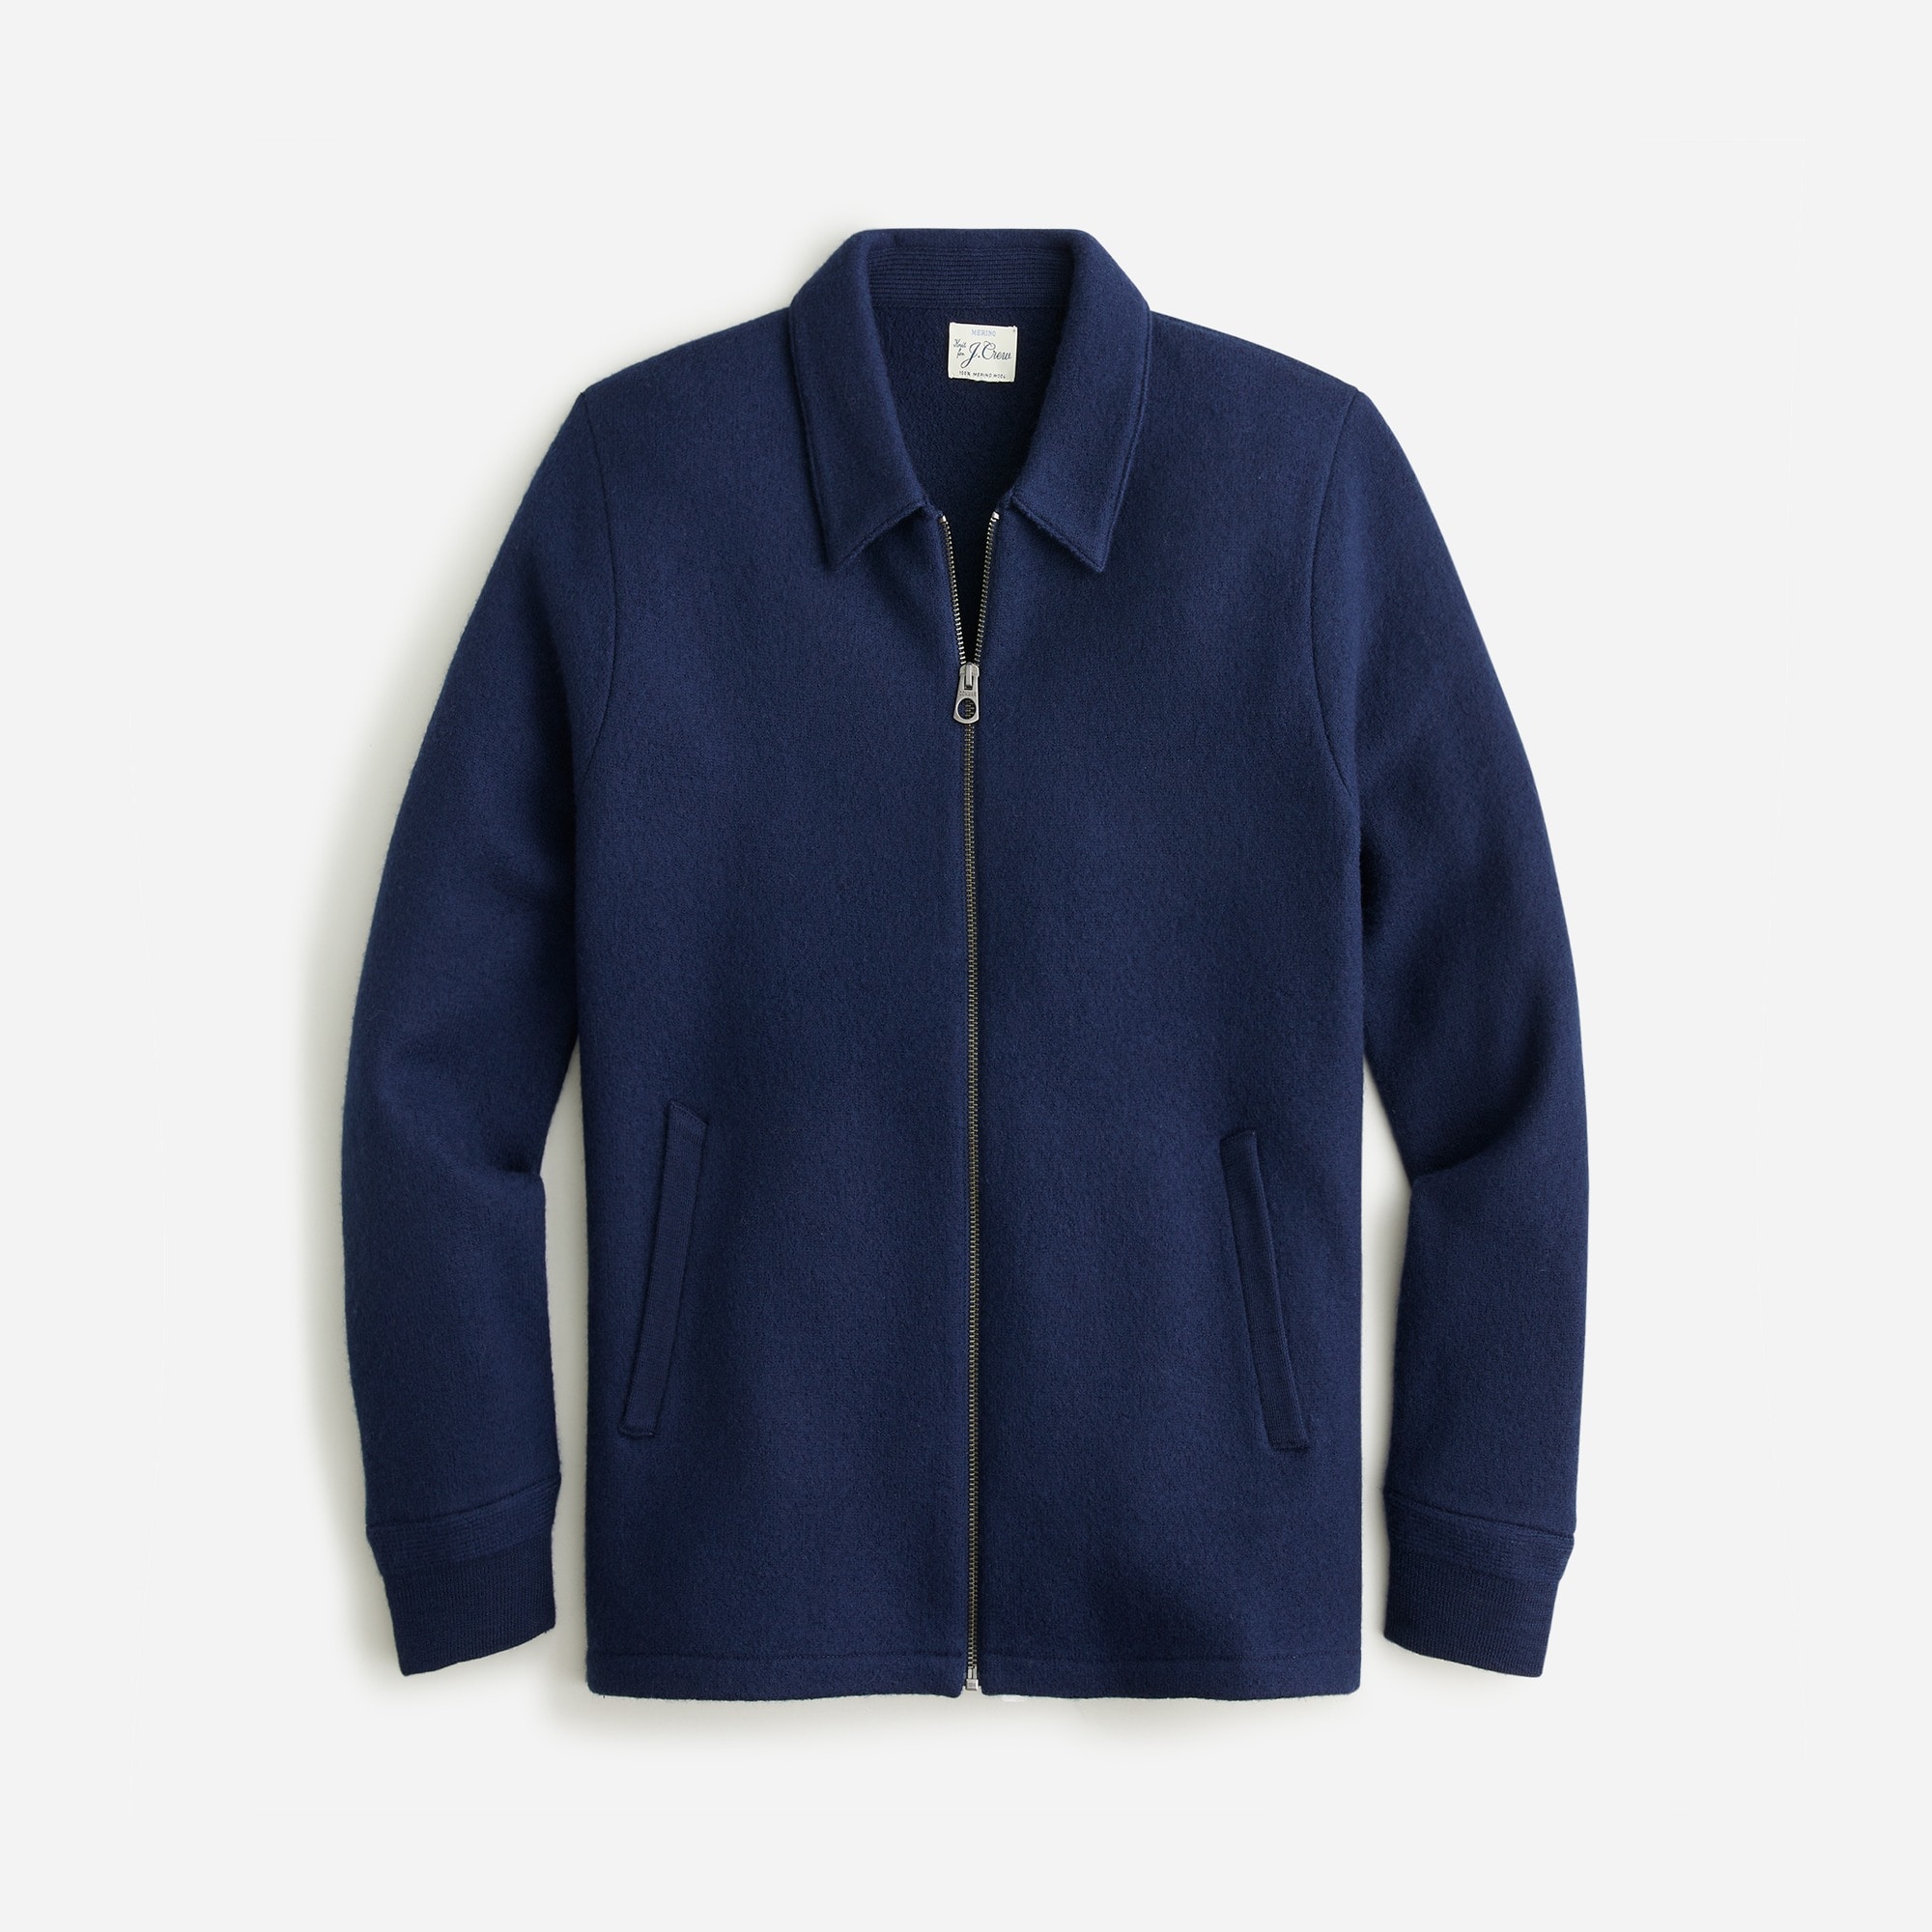 mens Boiled merino wool coach's sweater-jacket